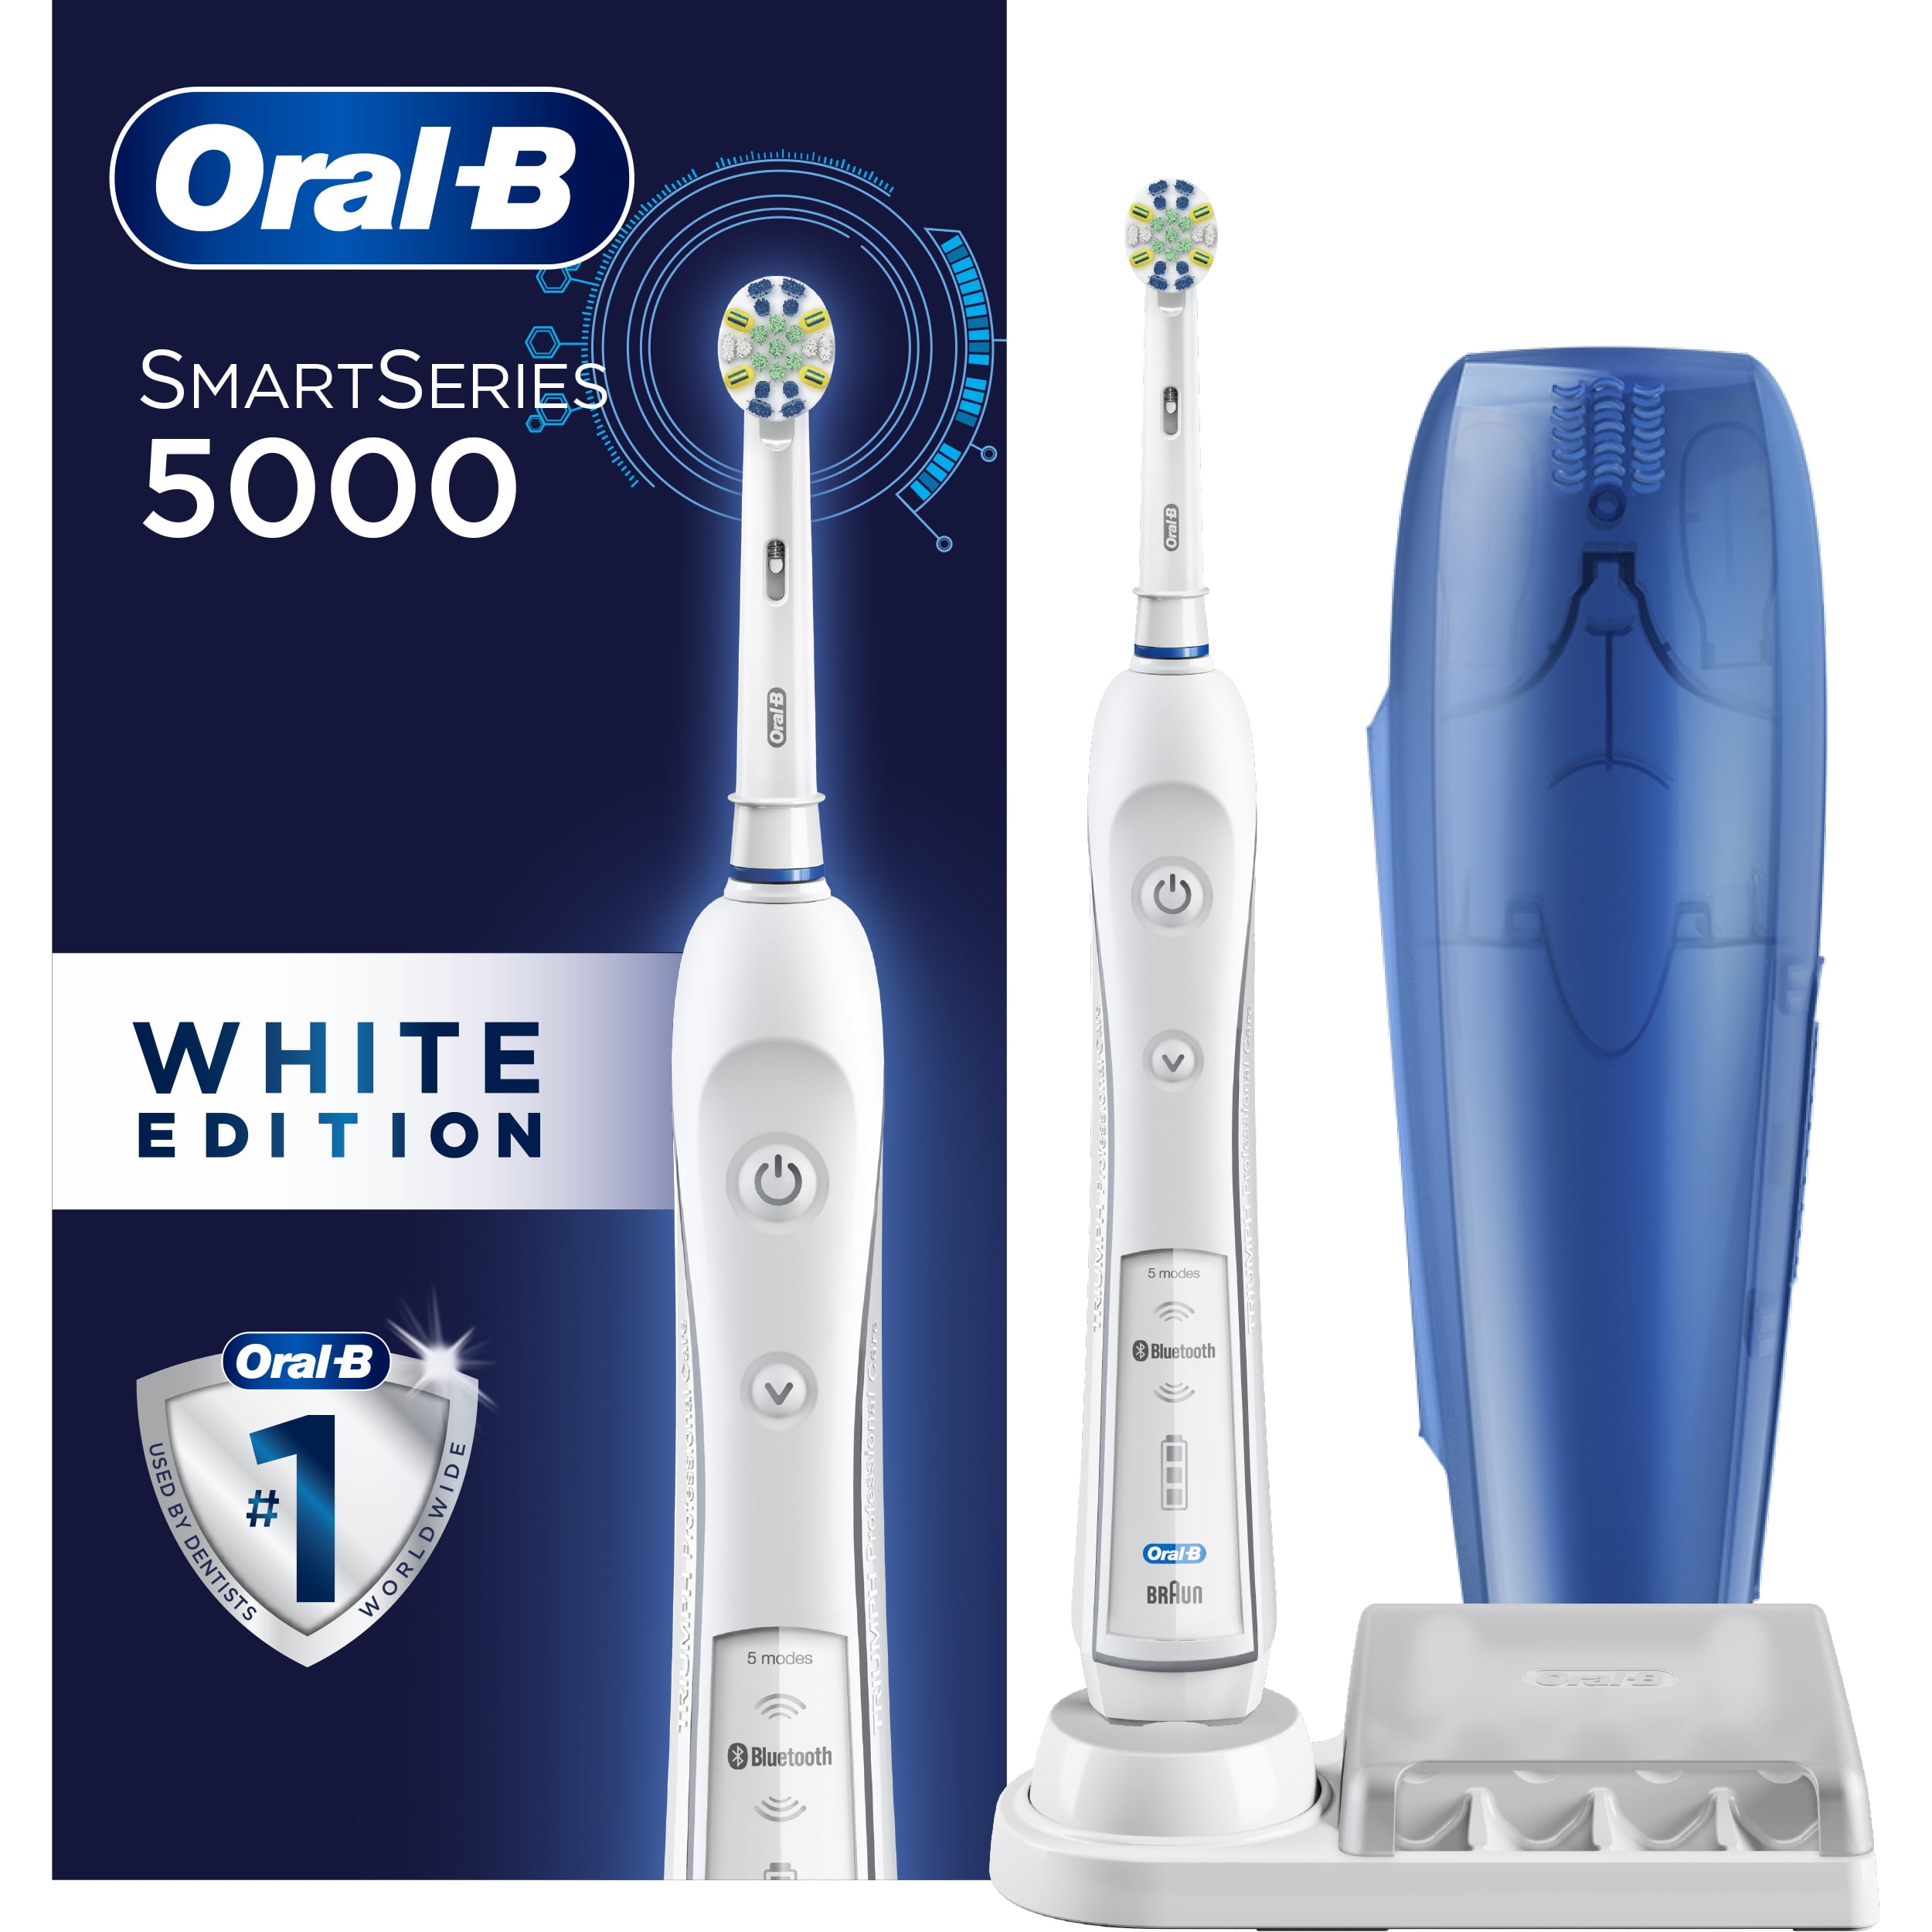 oral-b-electric-toothbrush-3000-discount-online-save-48-jlcatj-gob-mx